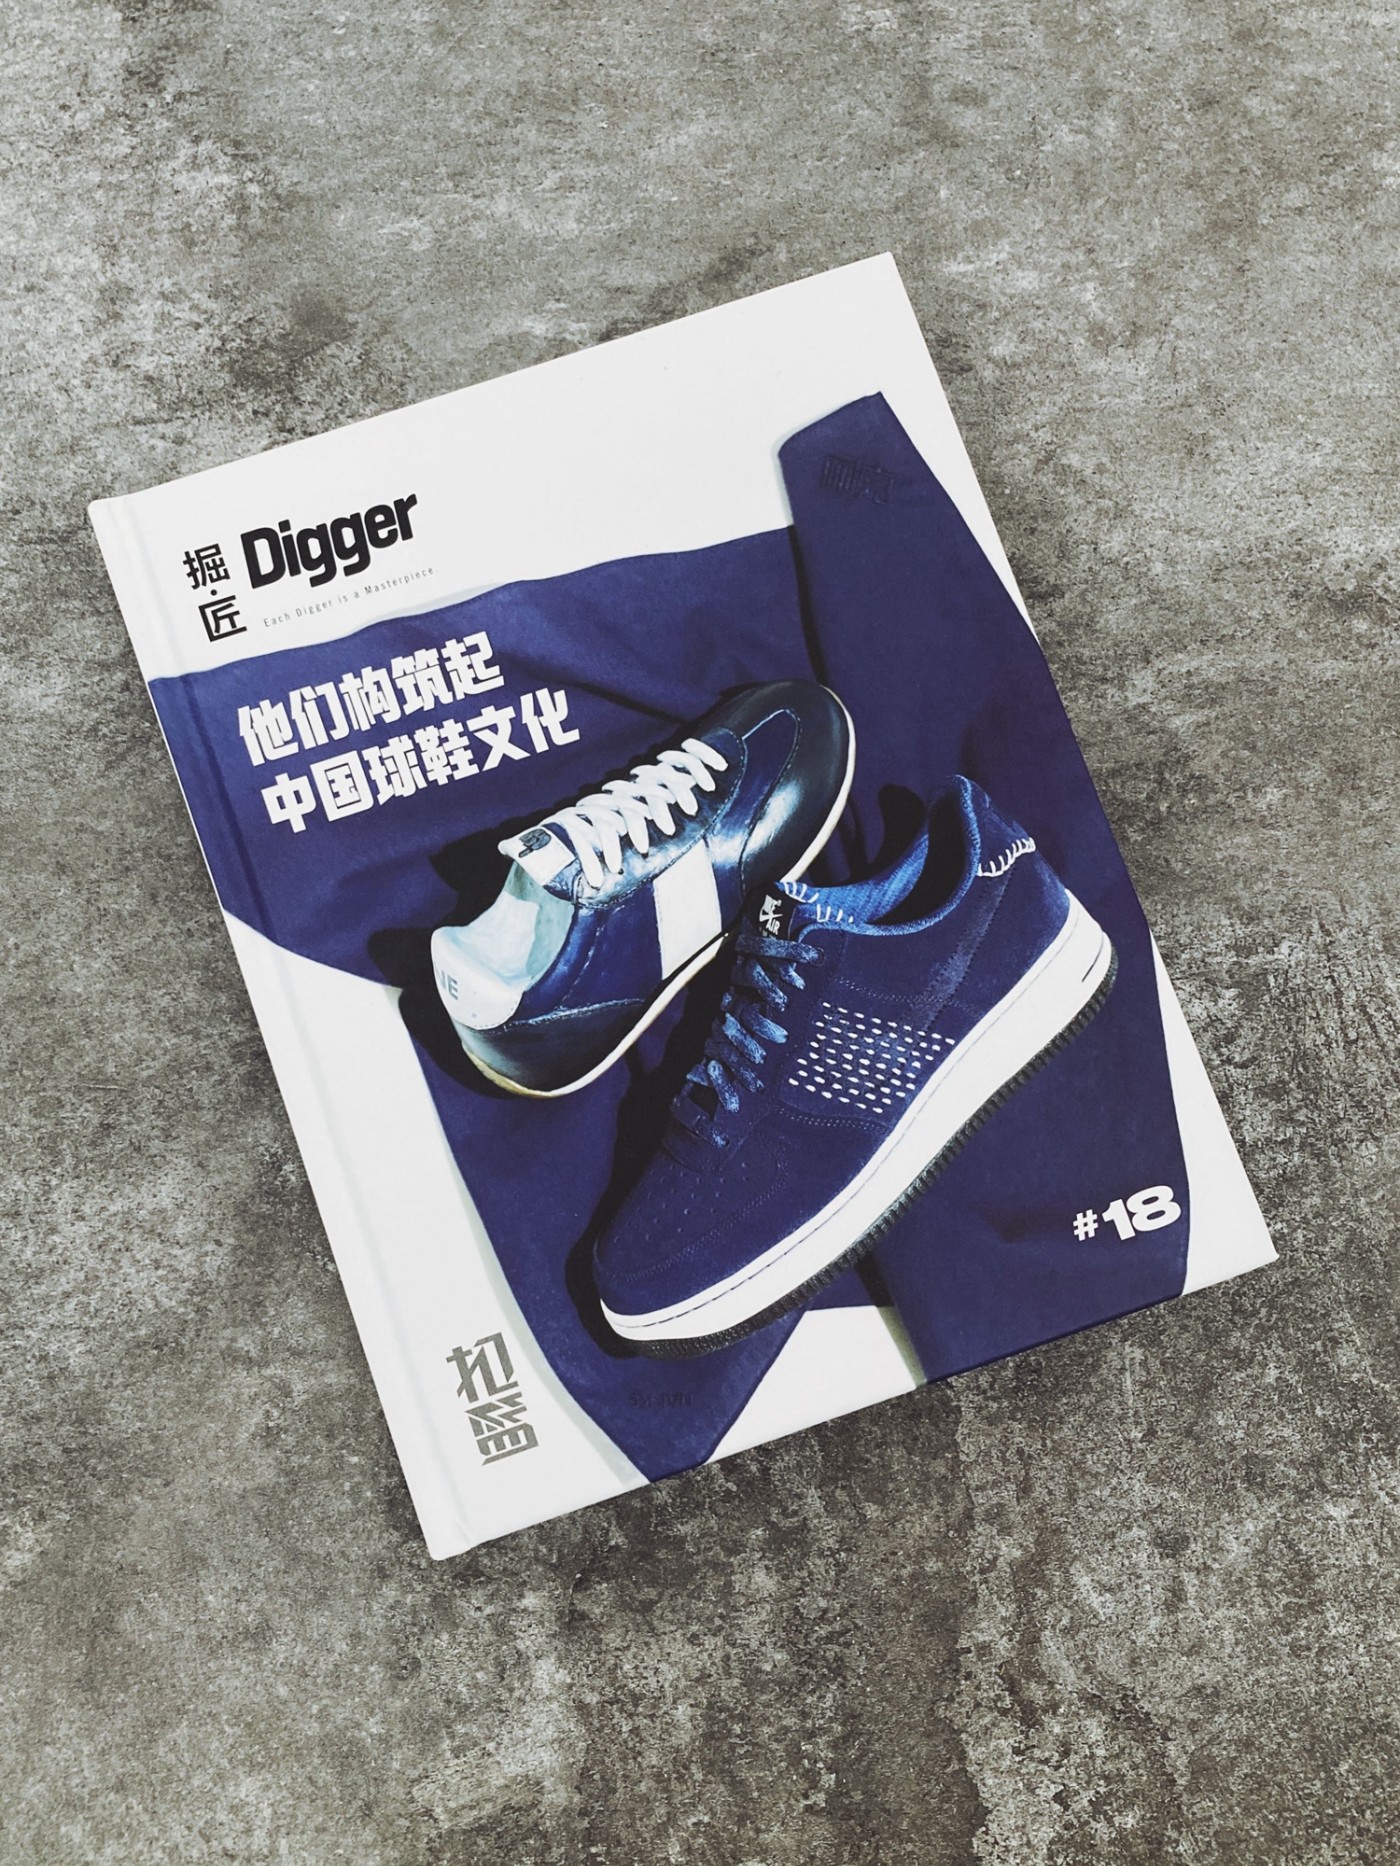 Digger Issue  老鞋迷集体泪目！《Digger》 Issue 18 刚刚发售！